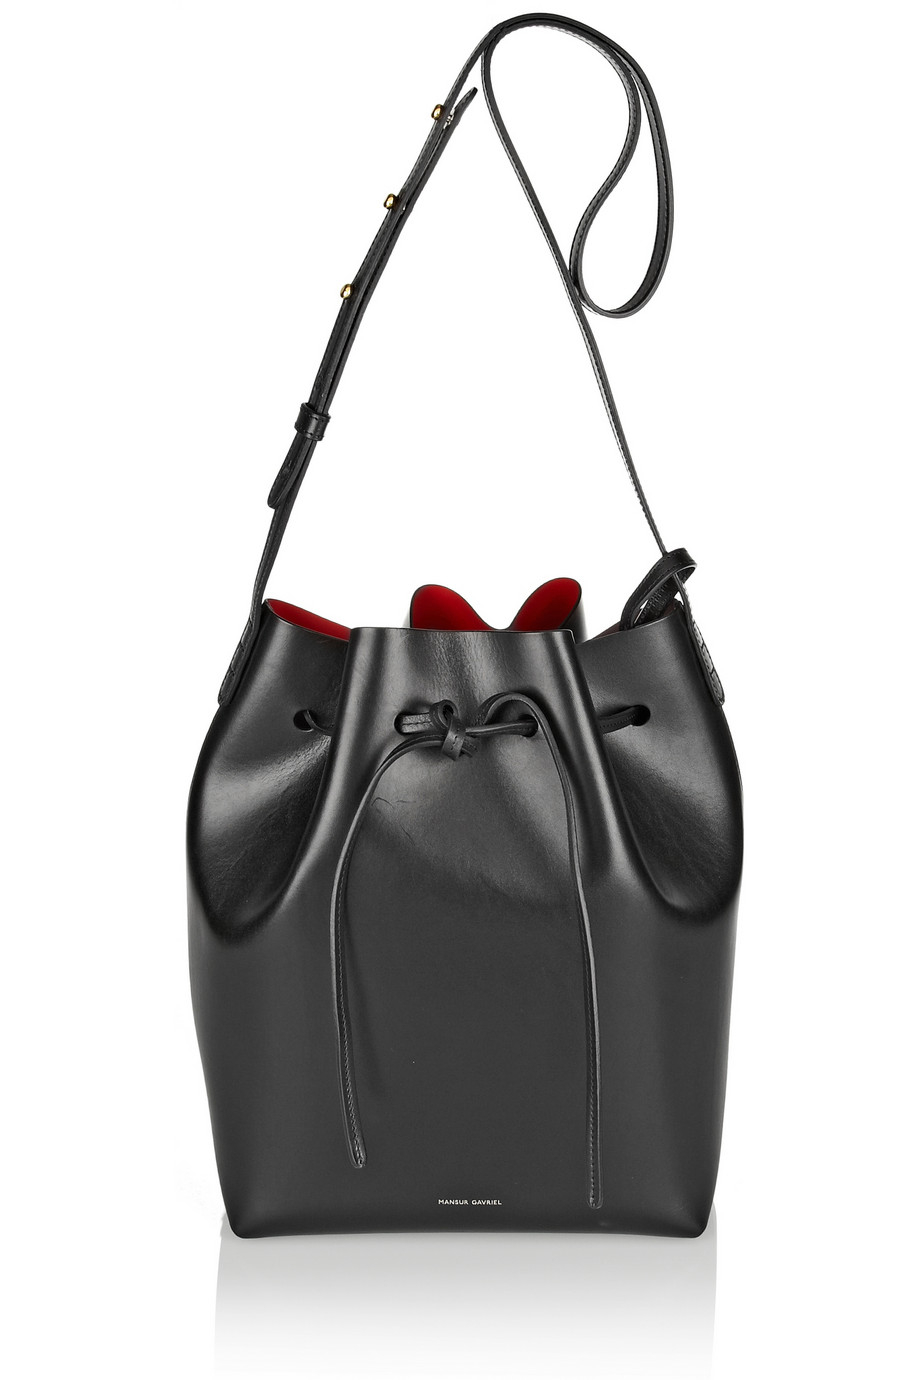 Mansur gavriel Leather Bucket Bag in Black | Lyst